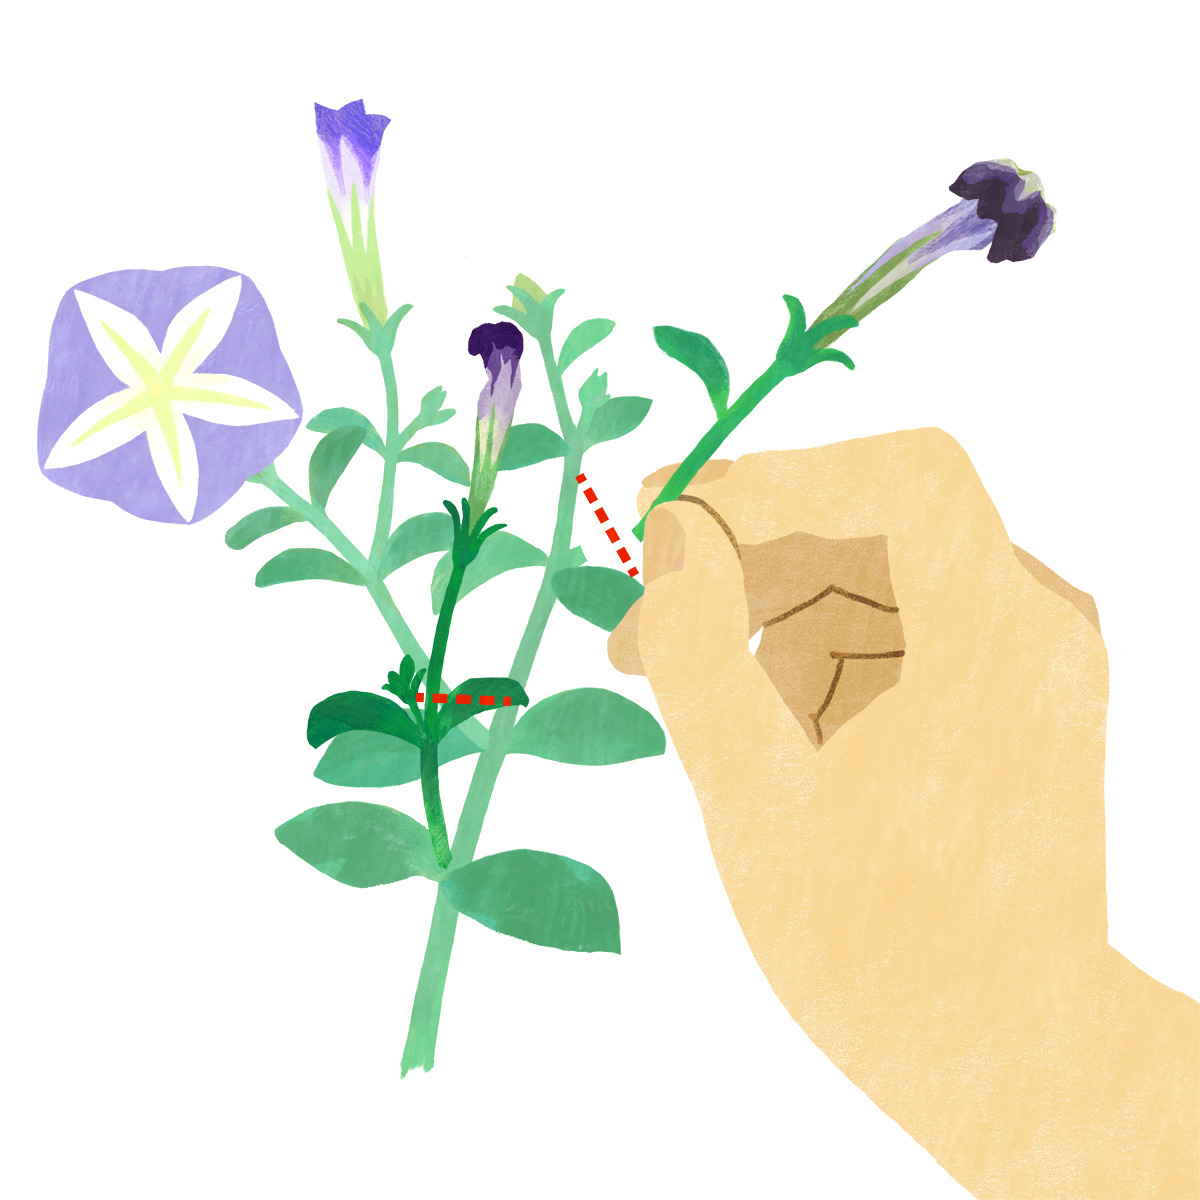 Akiyo Yamashita Illustration ペチュニアの手入れ 上 花ガラ摘み 結実しないよう 咲き終えた花を花柄 の根元から摘み取ります